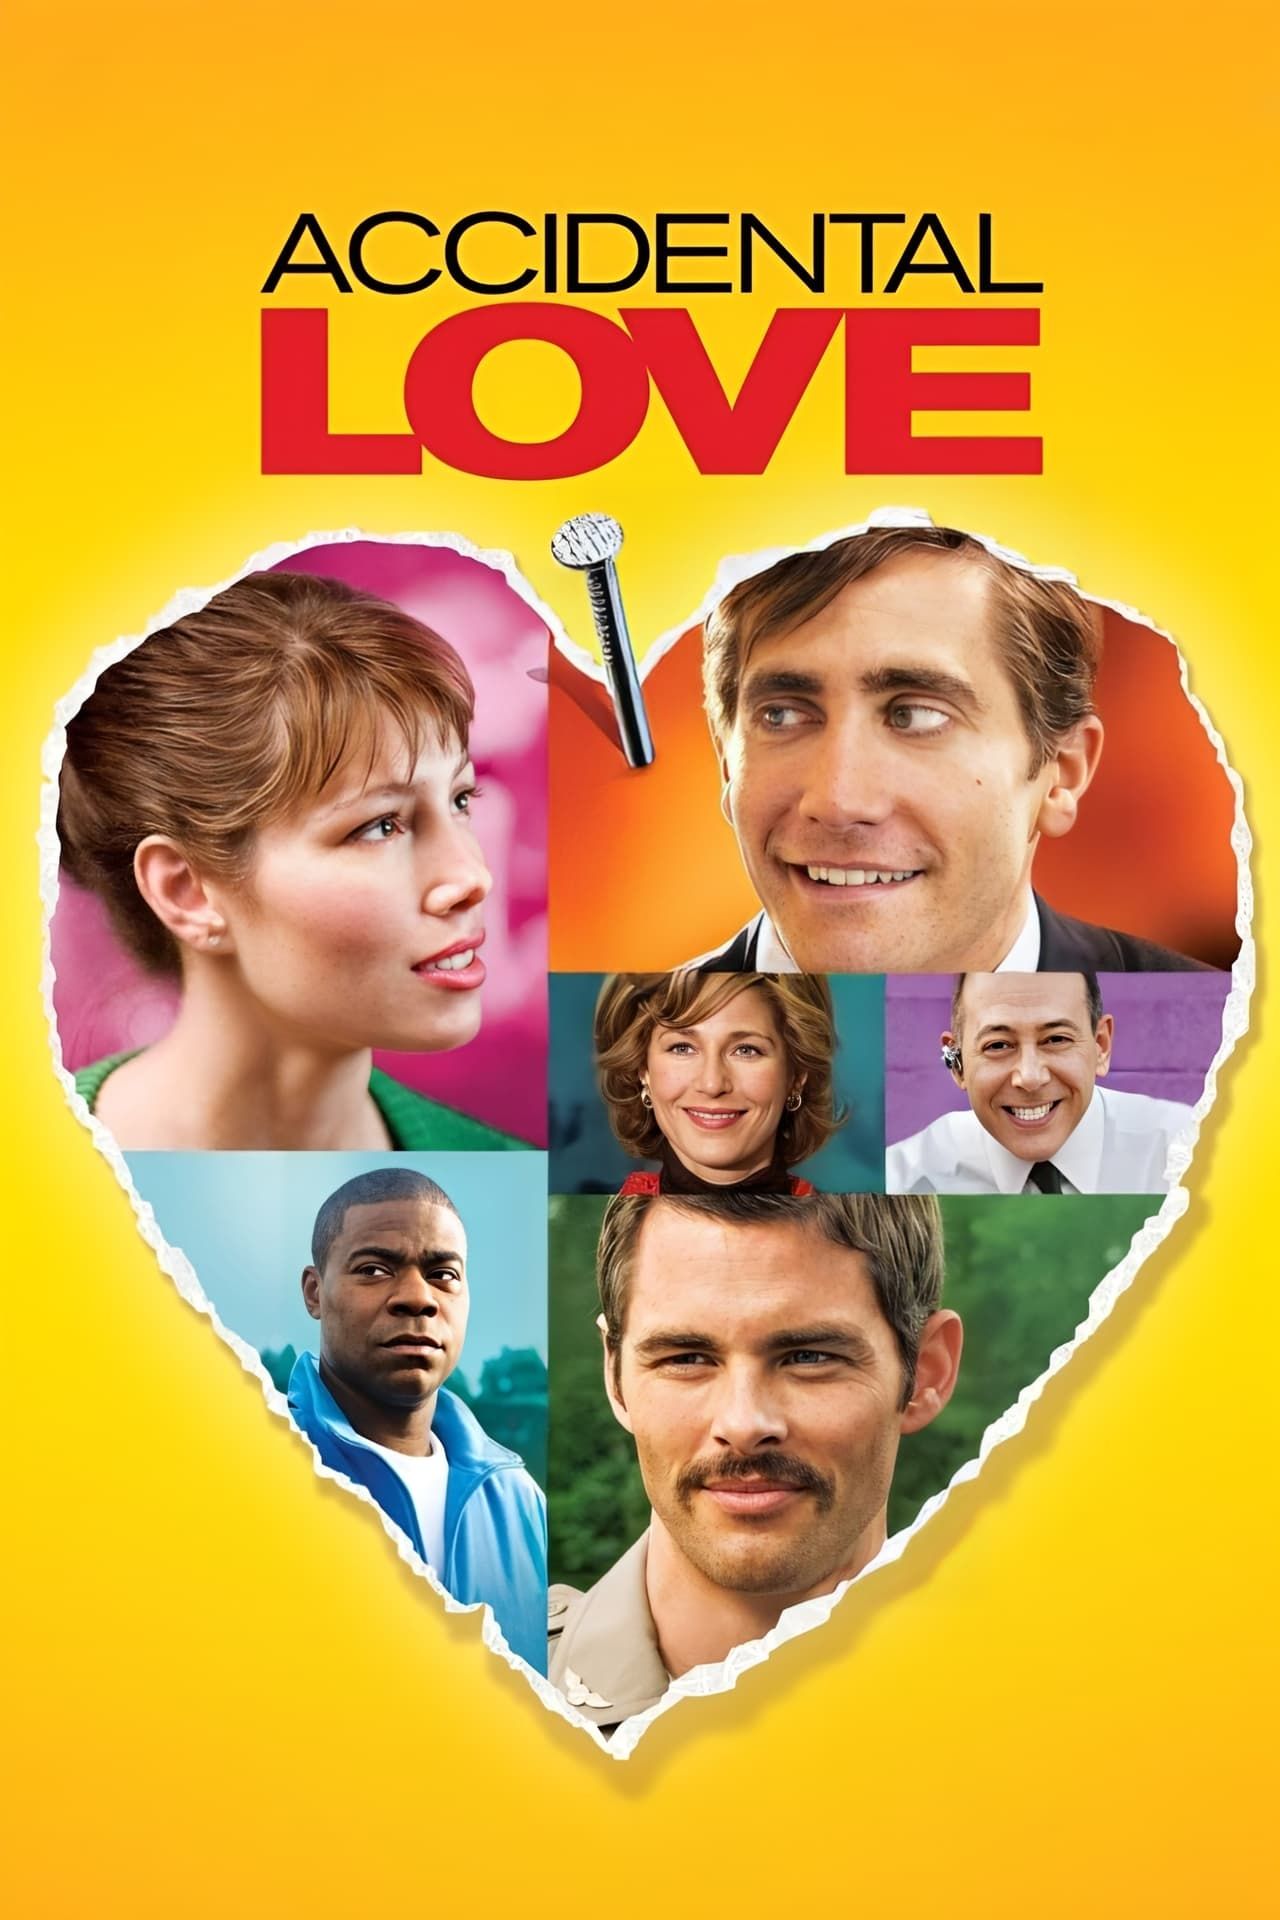 Accidental Love Movie Poster with Jessica Biel Jake Gyllenhaal James Marsden Paul Reubens, Catherine Keener, and Tracy Morgan